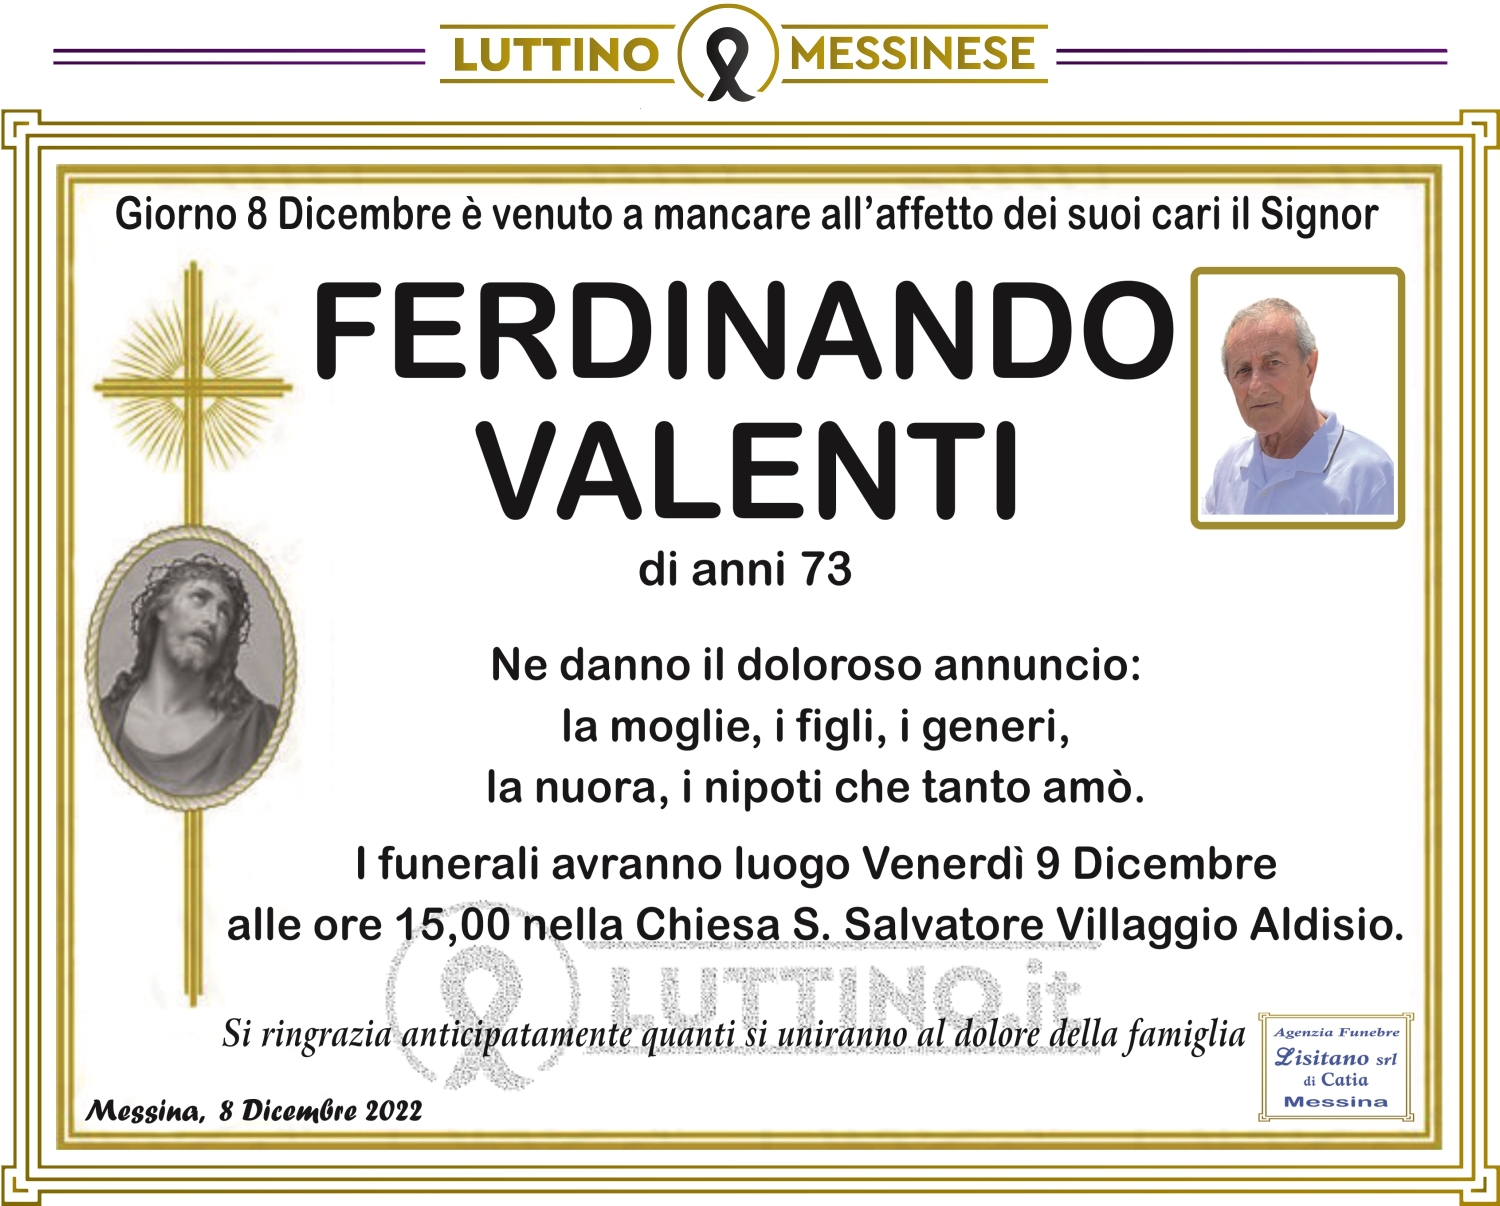 Ferdinando Valenti